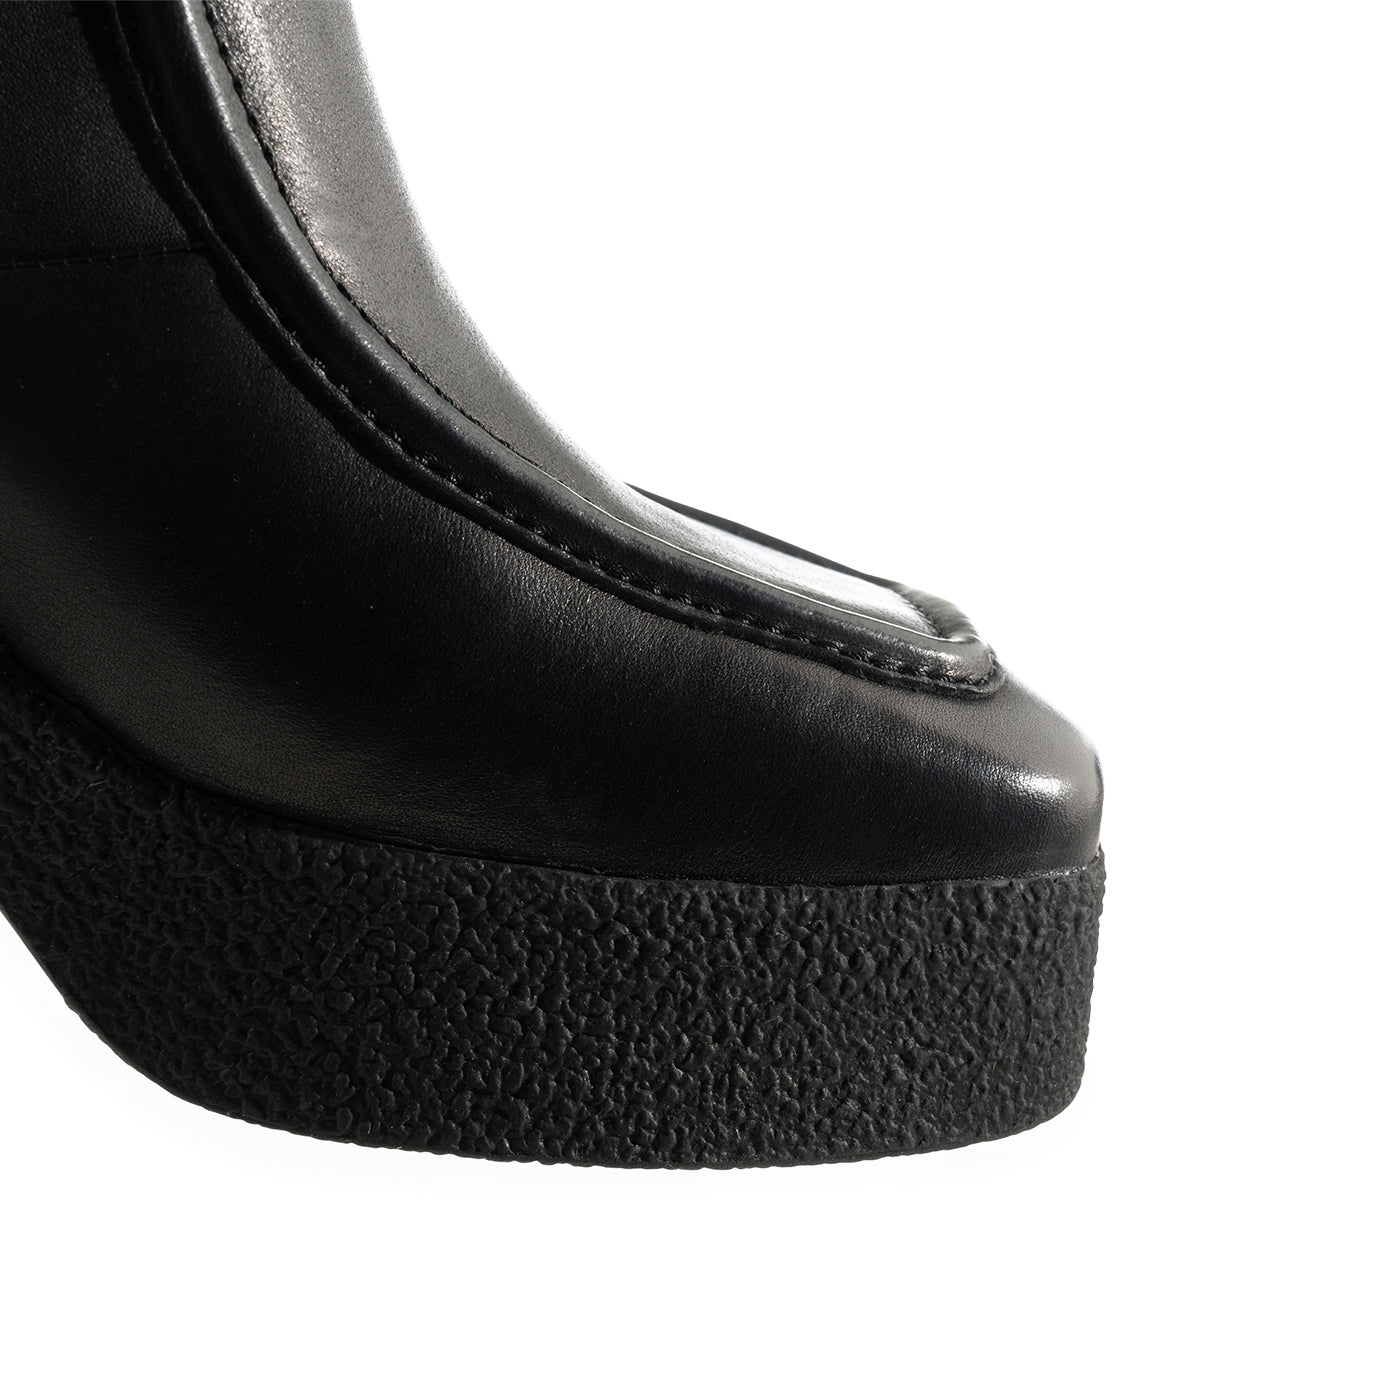 SHOE THE BEAR WOMENS Daphni støvlet læder Ankle Boots 110 BLACK